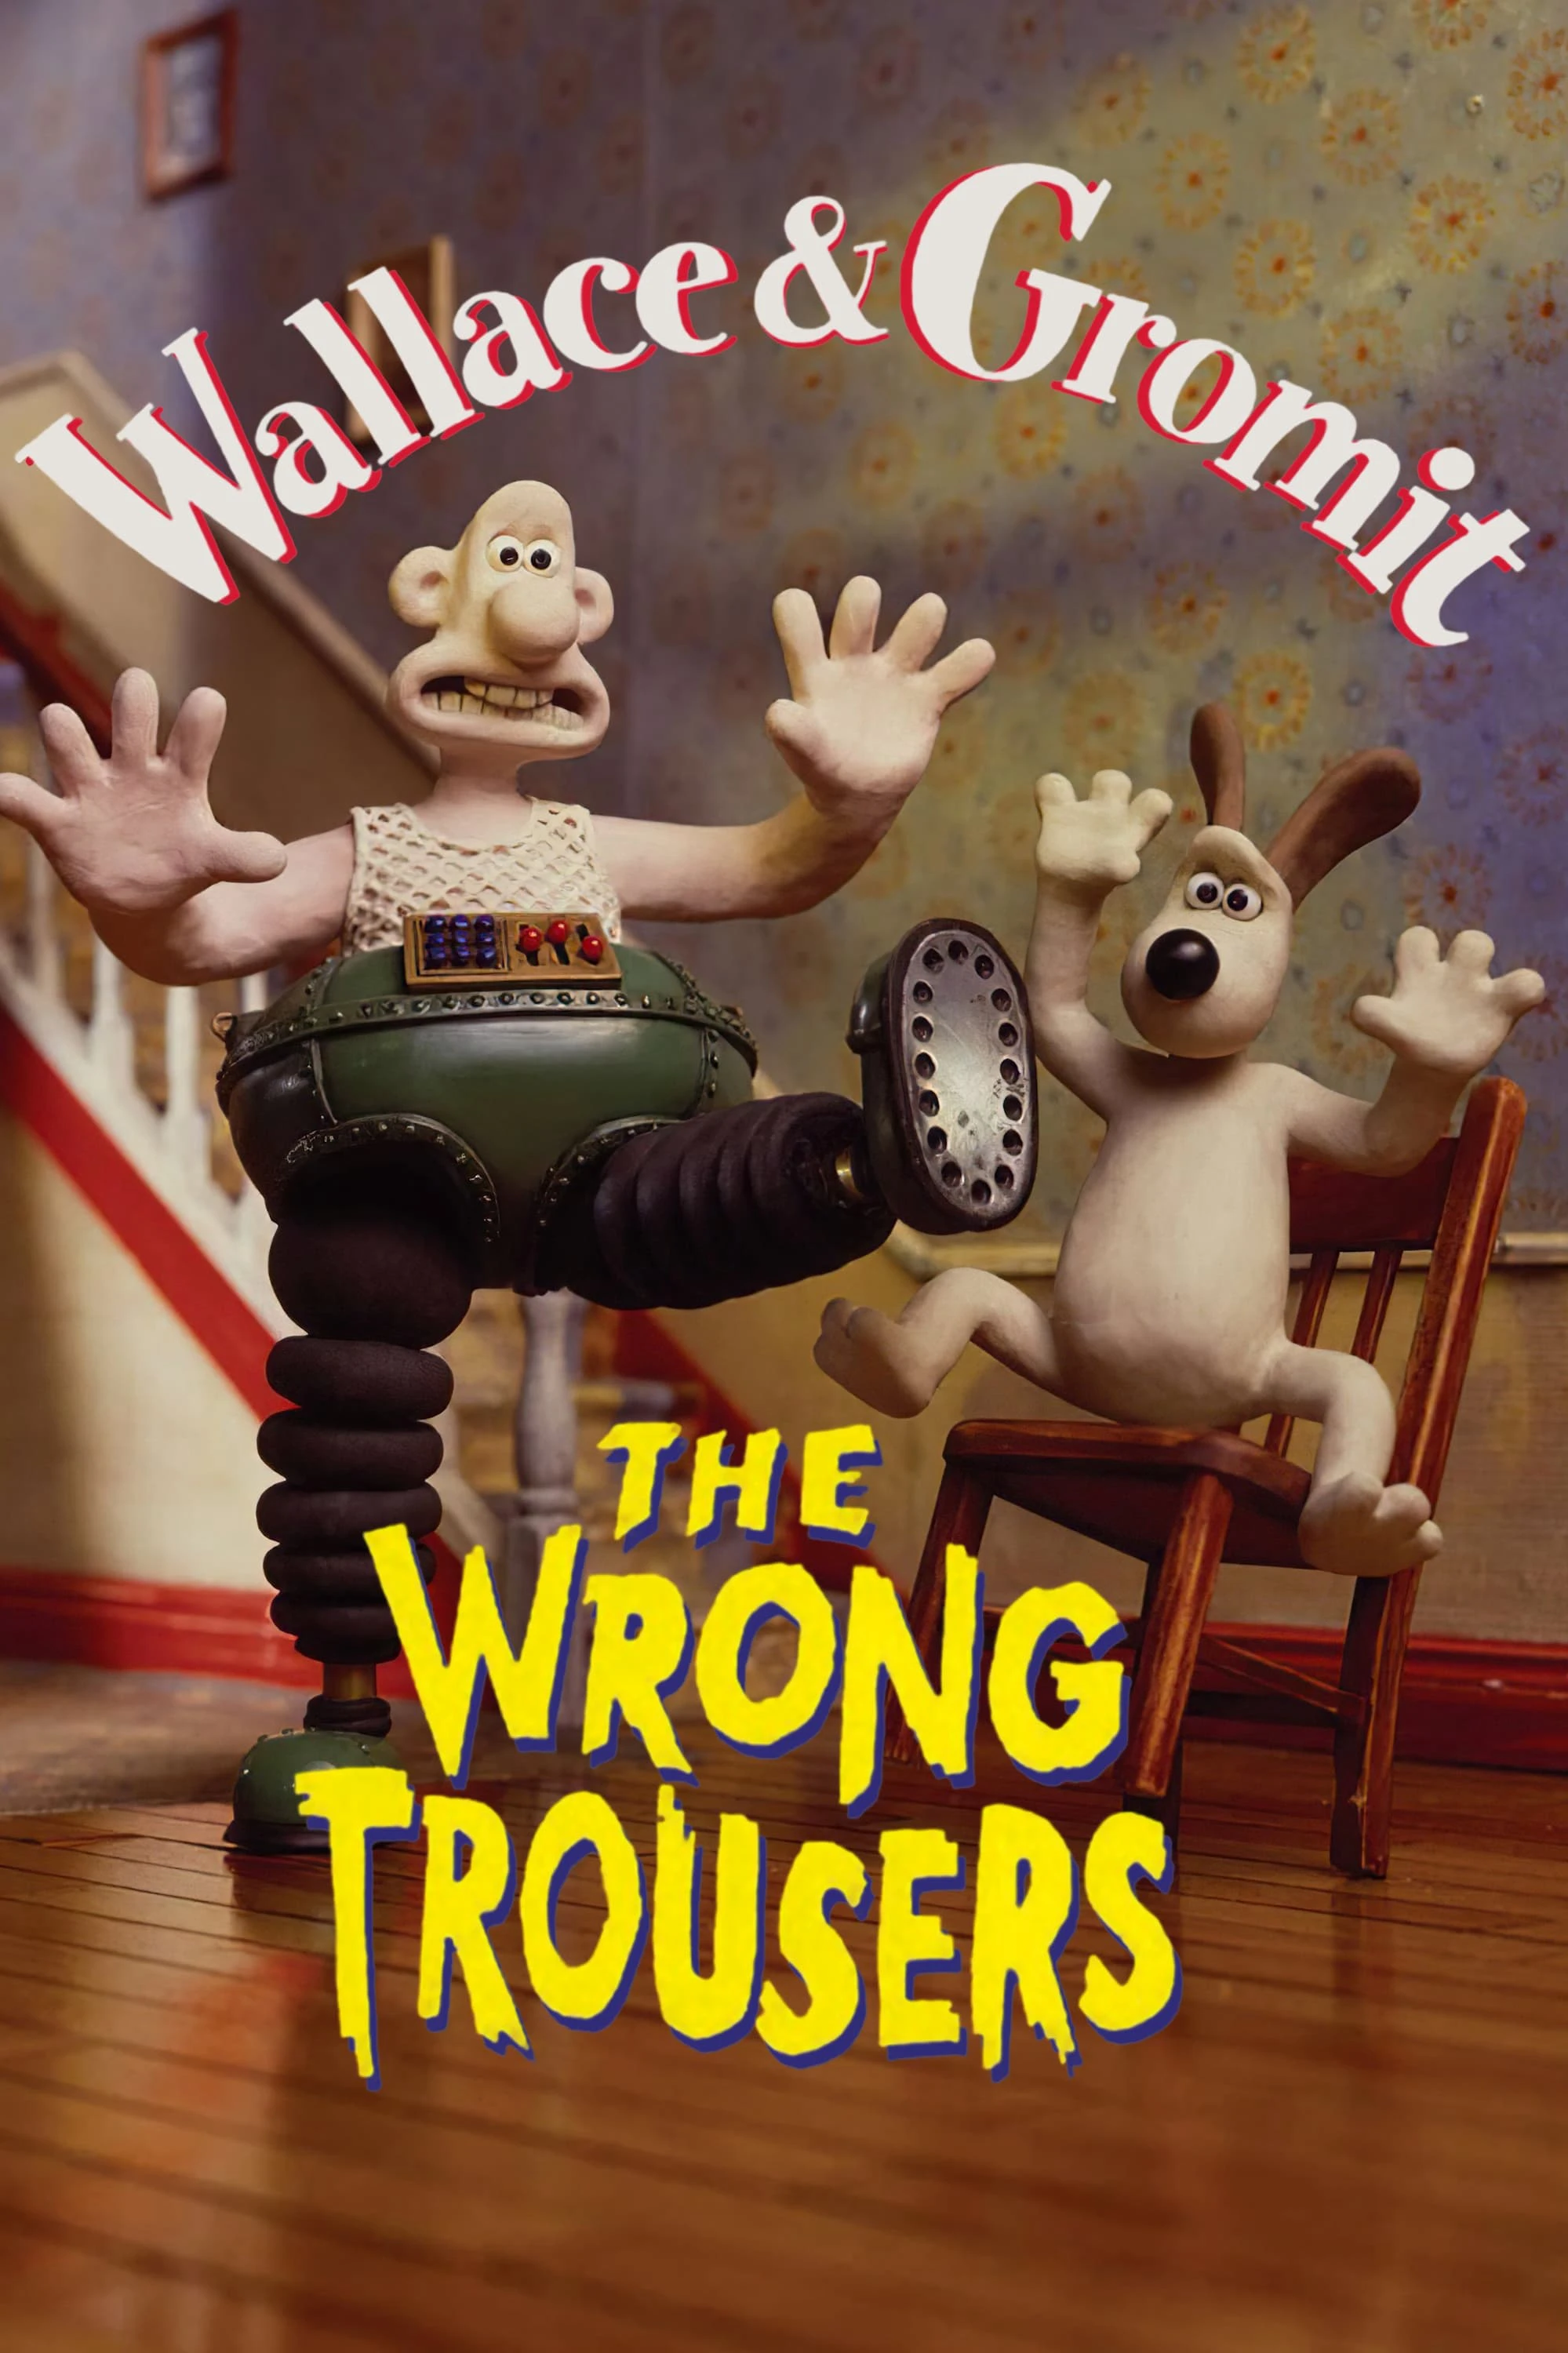  Wallace và Gromit - Chiếc Quần Rắc Rối | The Wrong Trousers (1993)